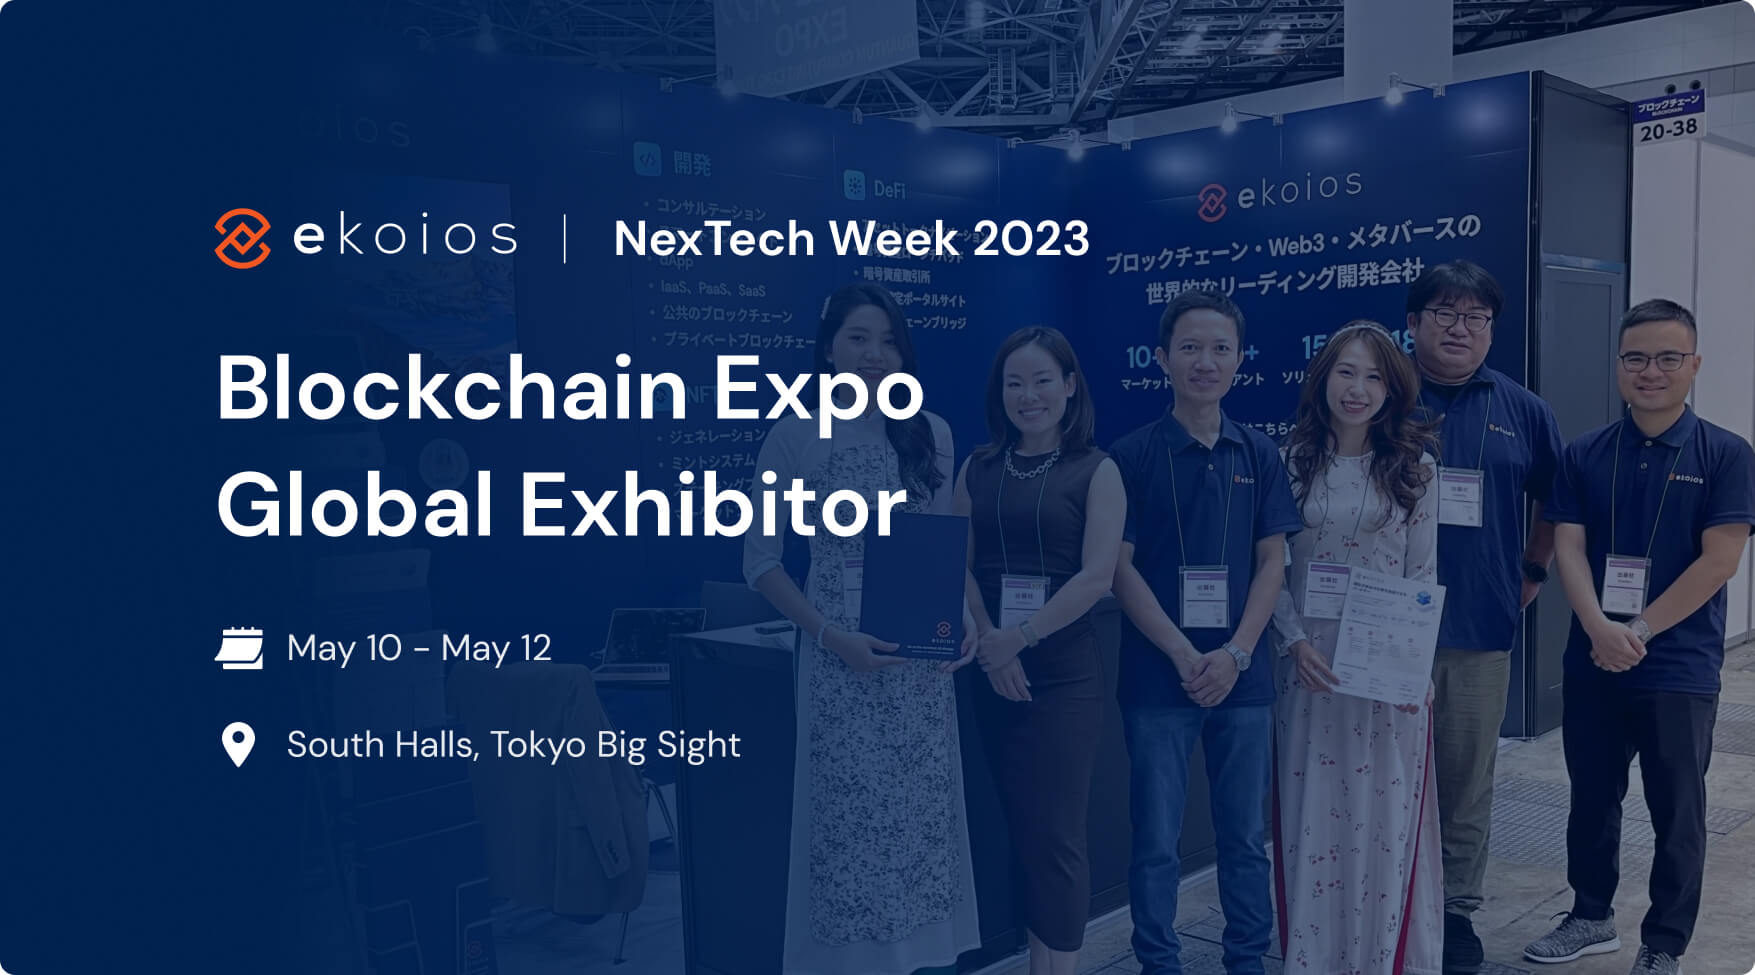 Ekoios Technologyは今年Blockchain Expo 2023の再出展を決定しました。